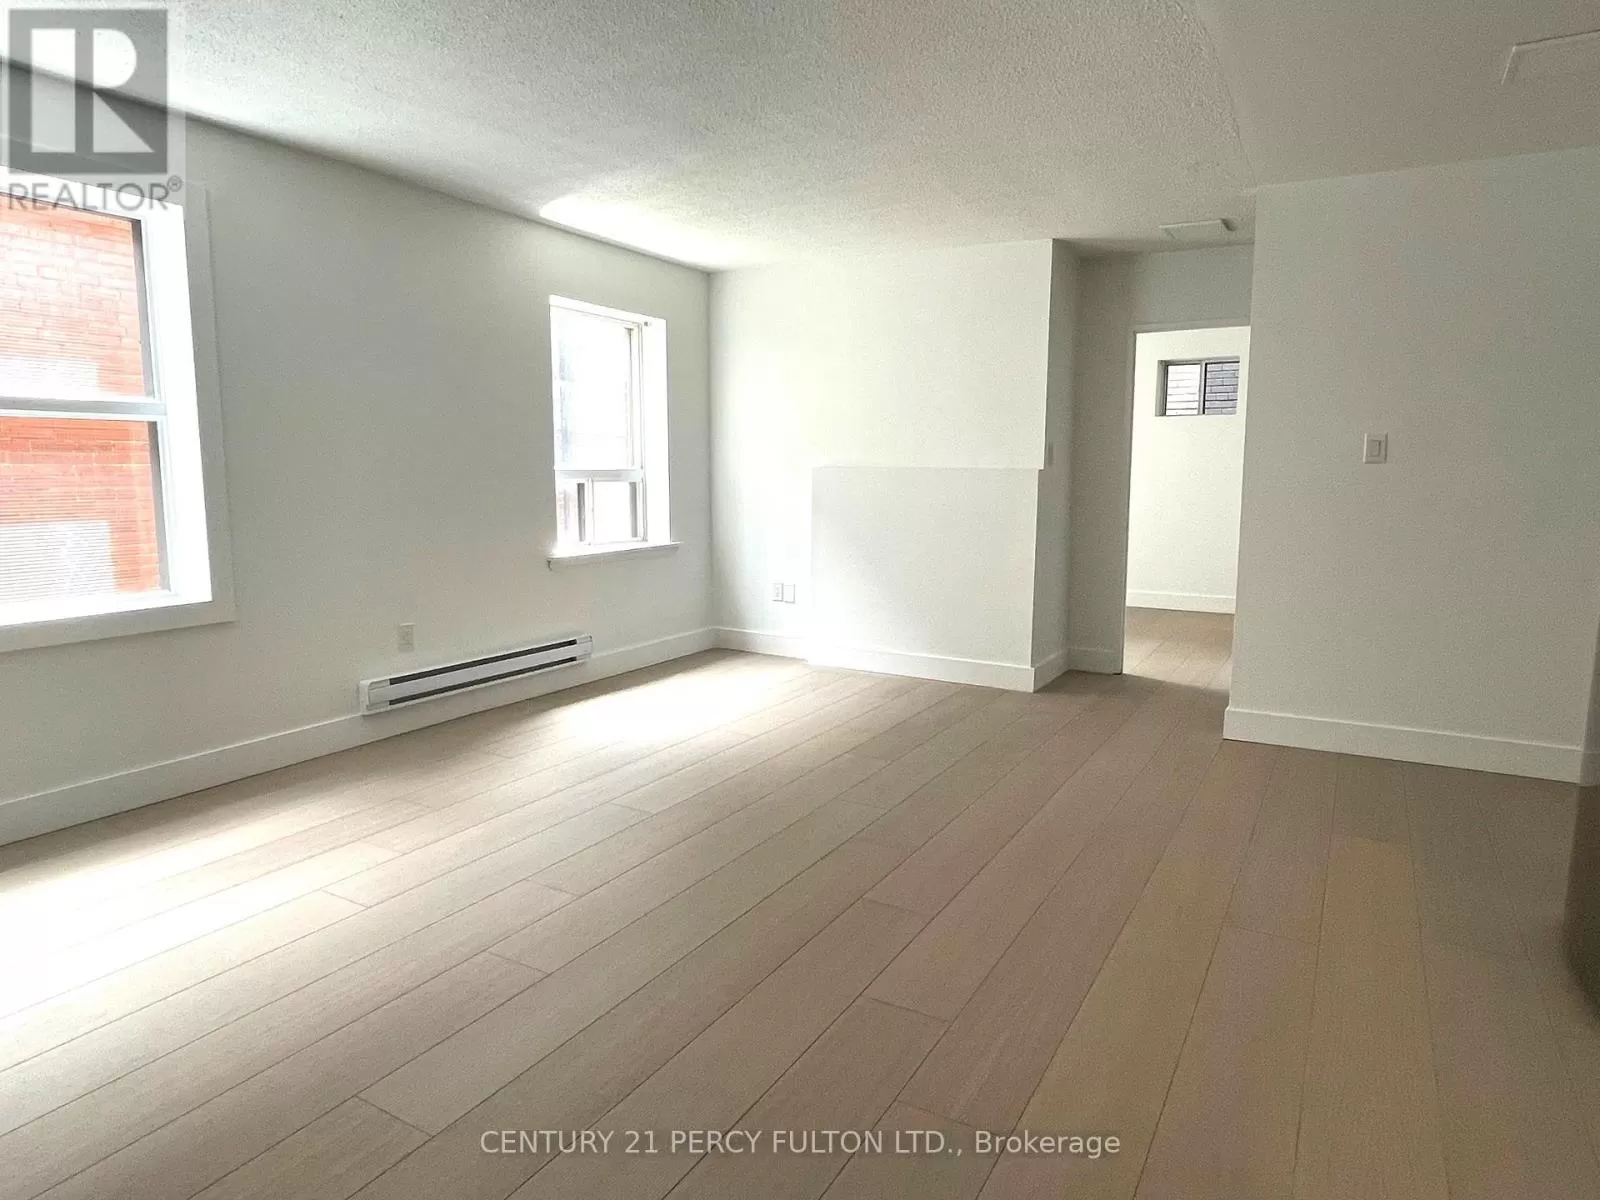 Apartment for rent: 8 - 2373 Bloor Street W, Toronto, Ontario M6S 1P6